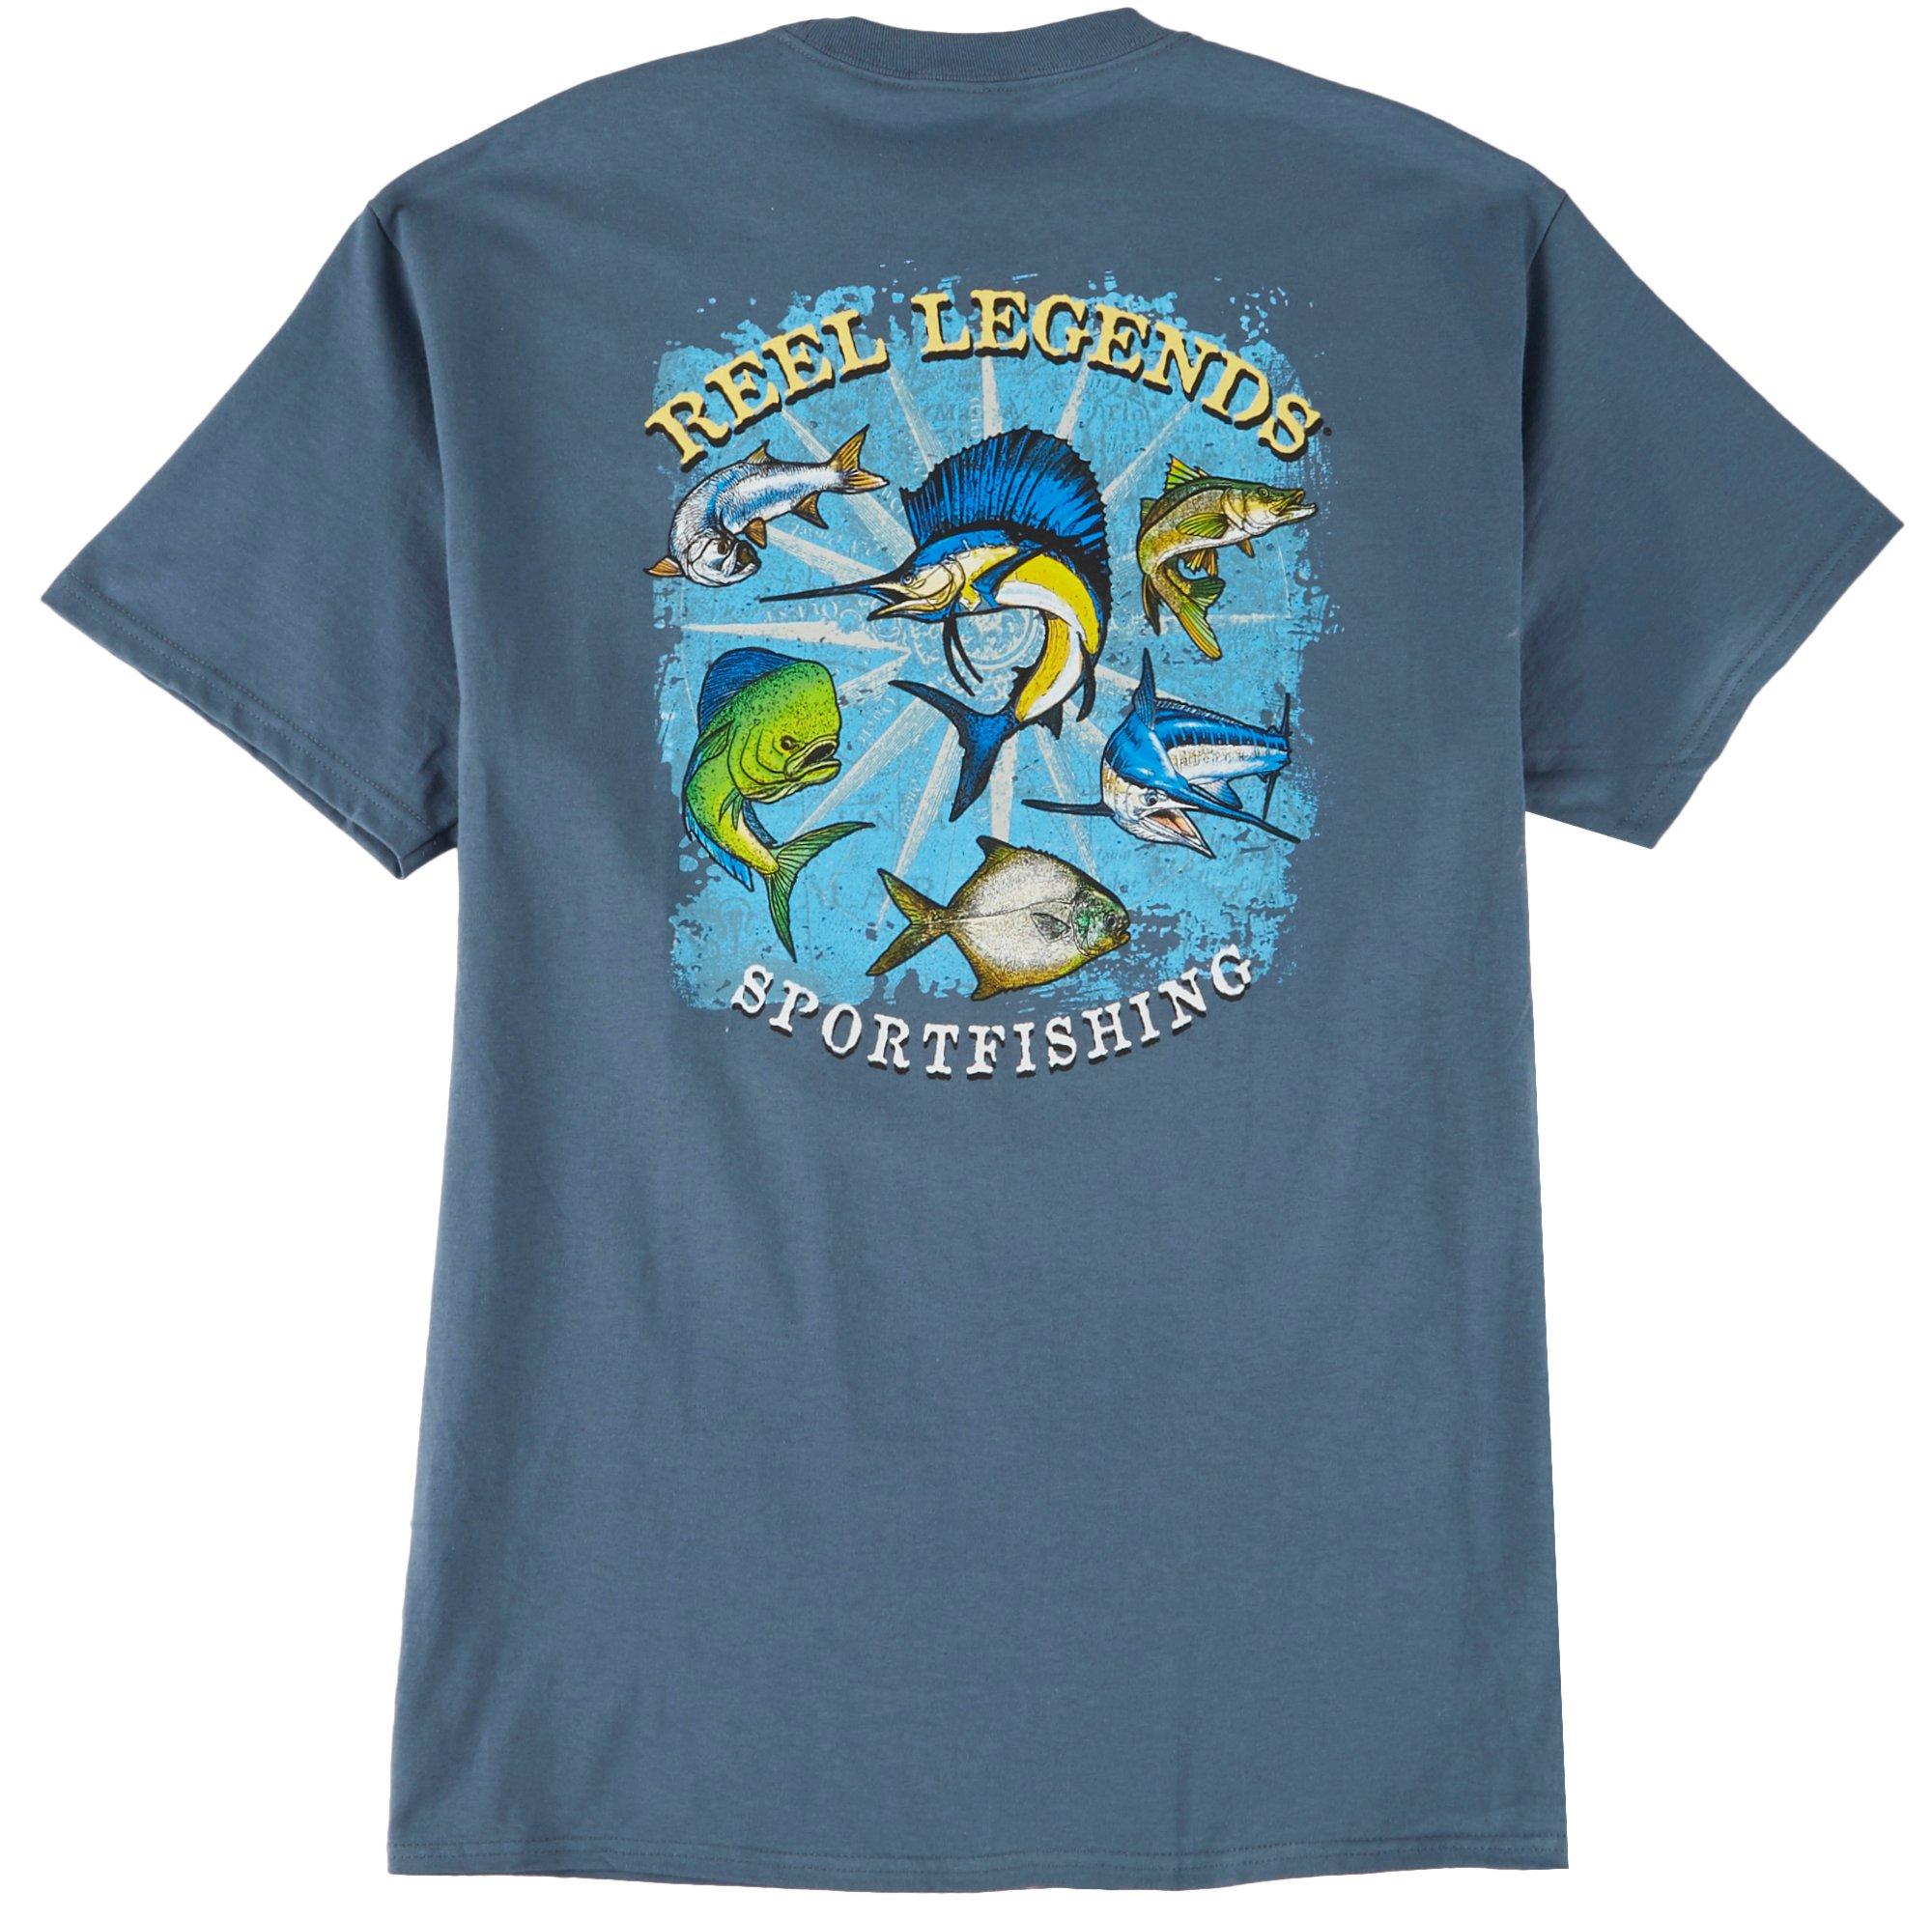 Reel Legends Mens Sport Fishing Graphic Short Sleeve T-Shirt